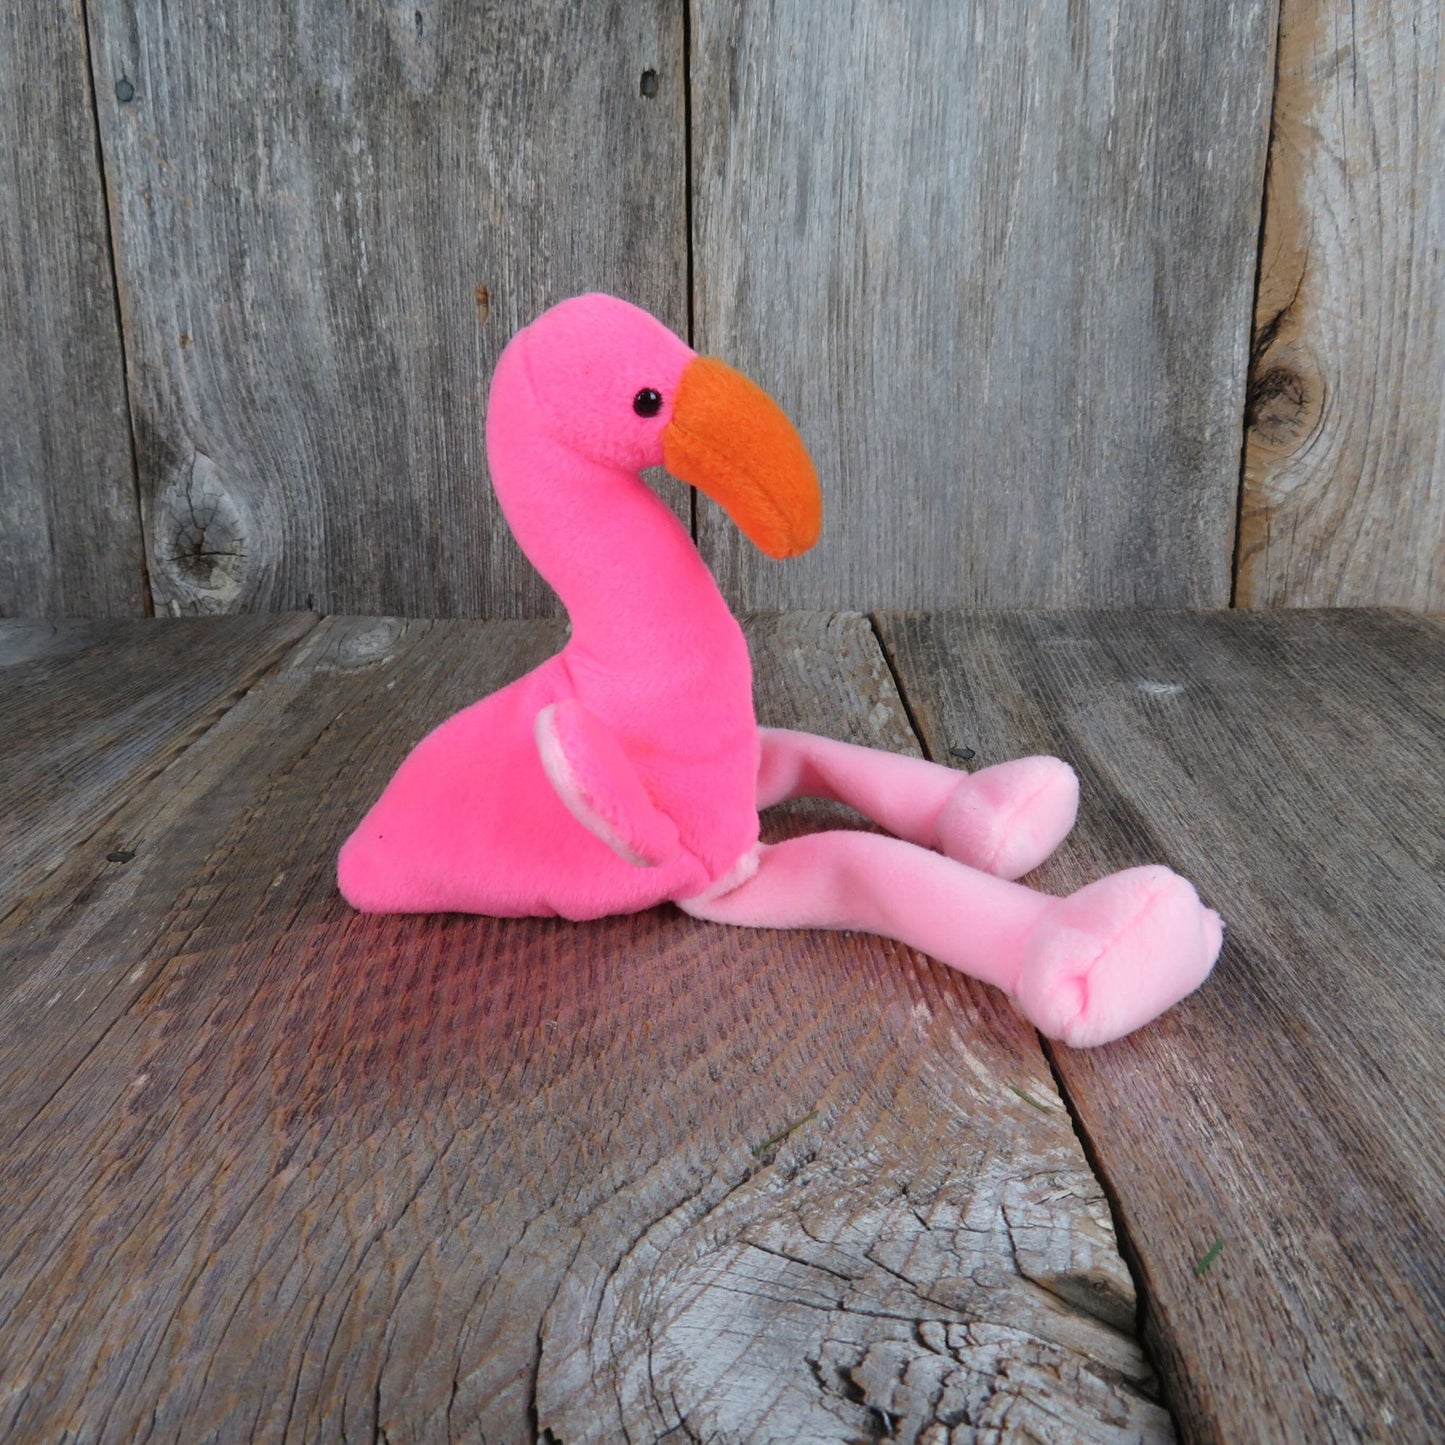 Flamingo Plush Pinky Bird Beanie Baby Bean Bag Pink Stuffed Animal 1995